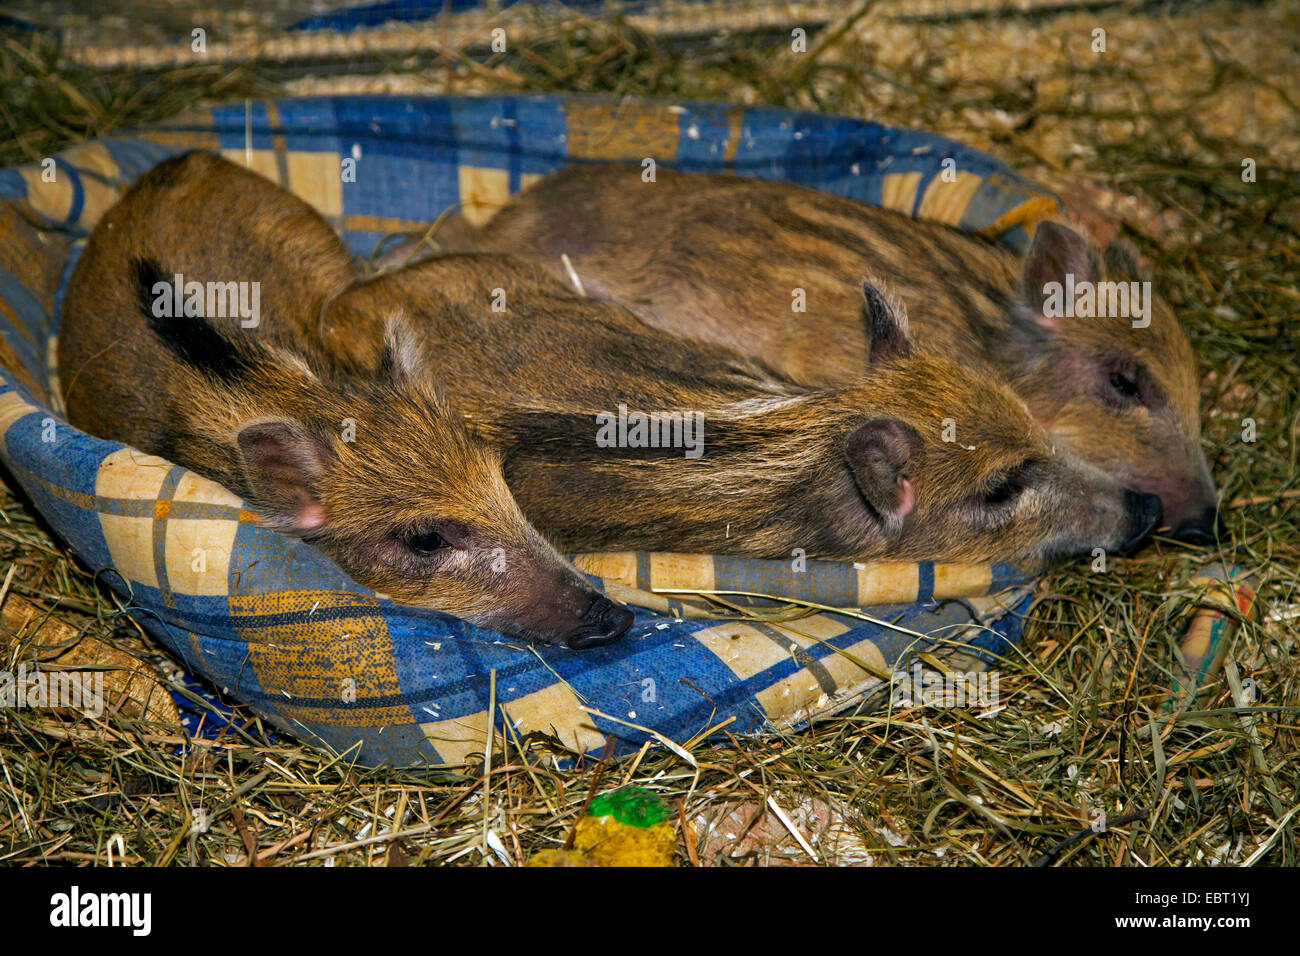 wild boar, pig, wild boar (Sus scrofa), three shoats lying tired in a dog basket, Germany Stock Photo